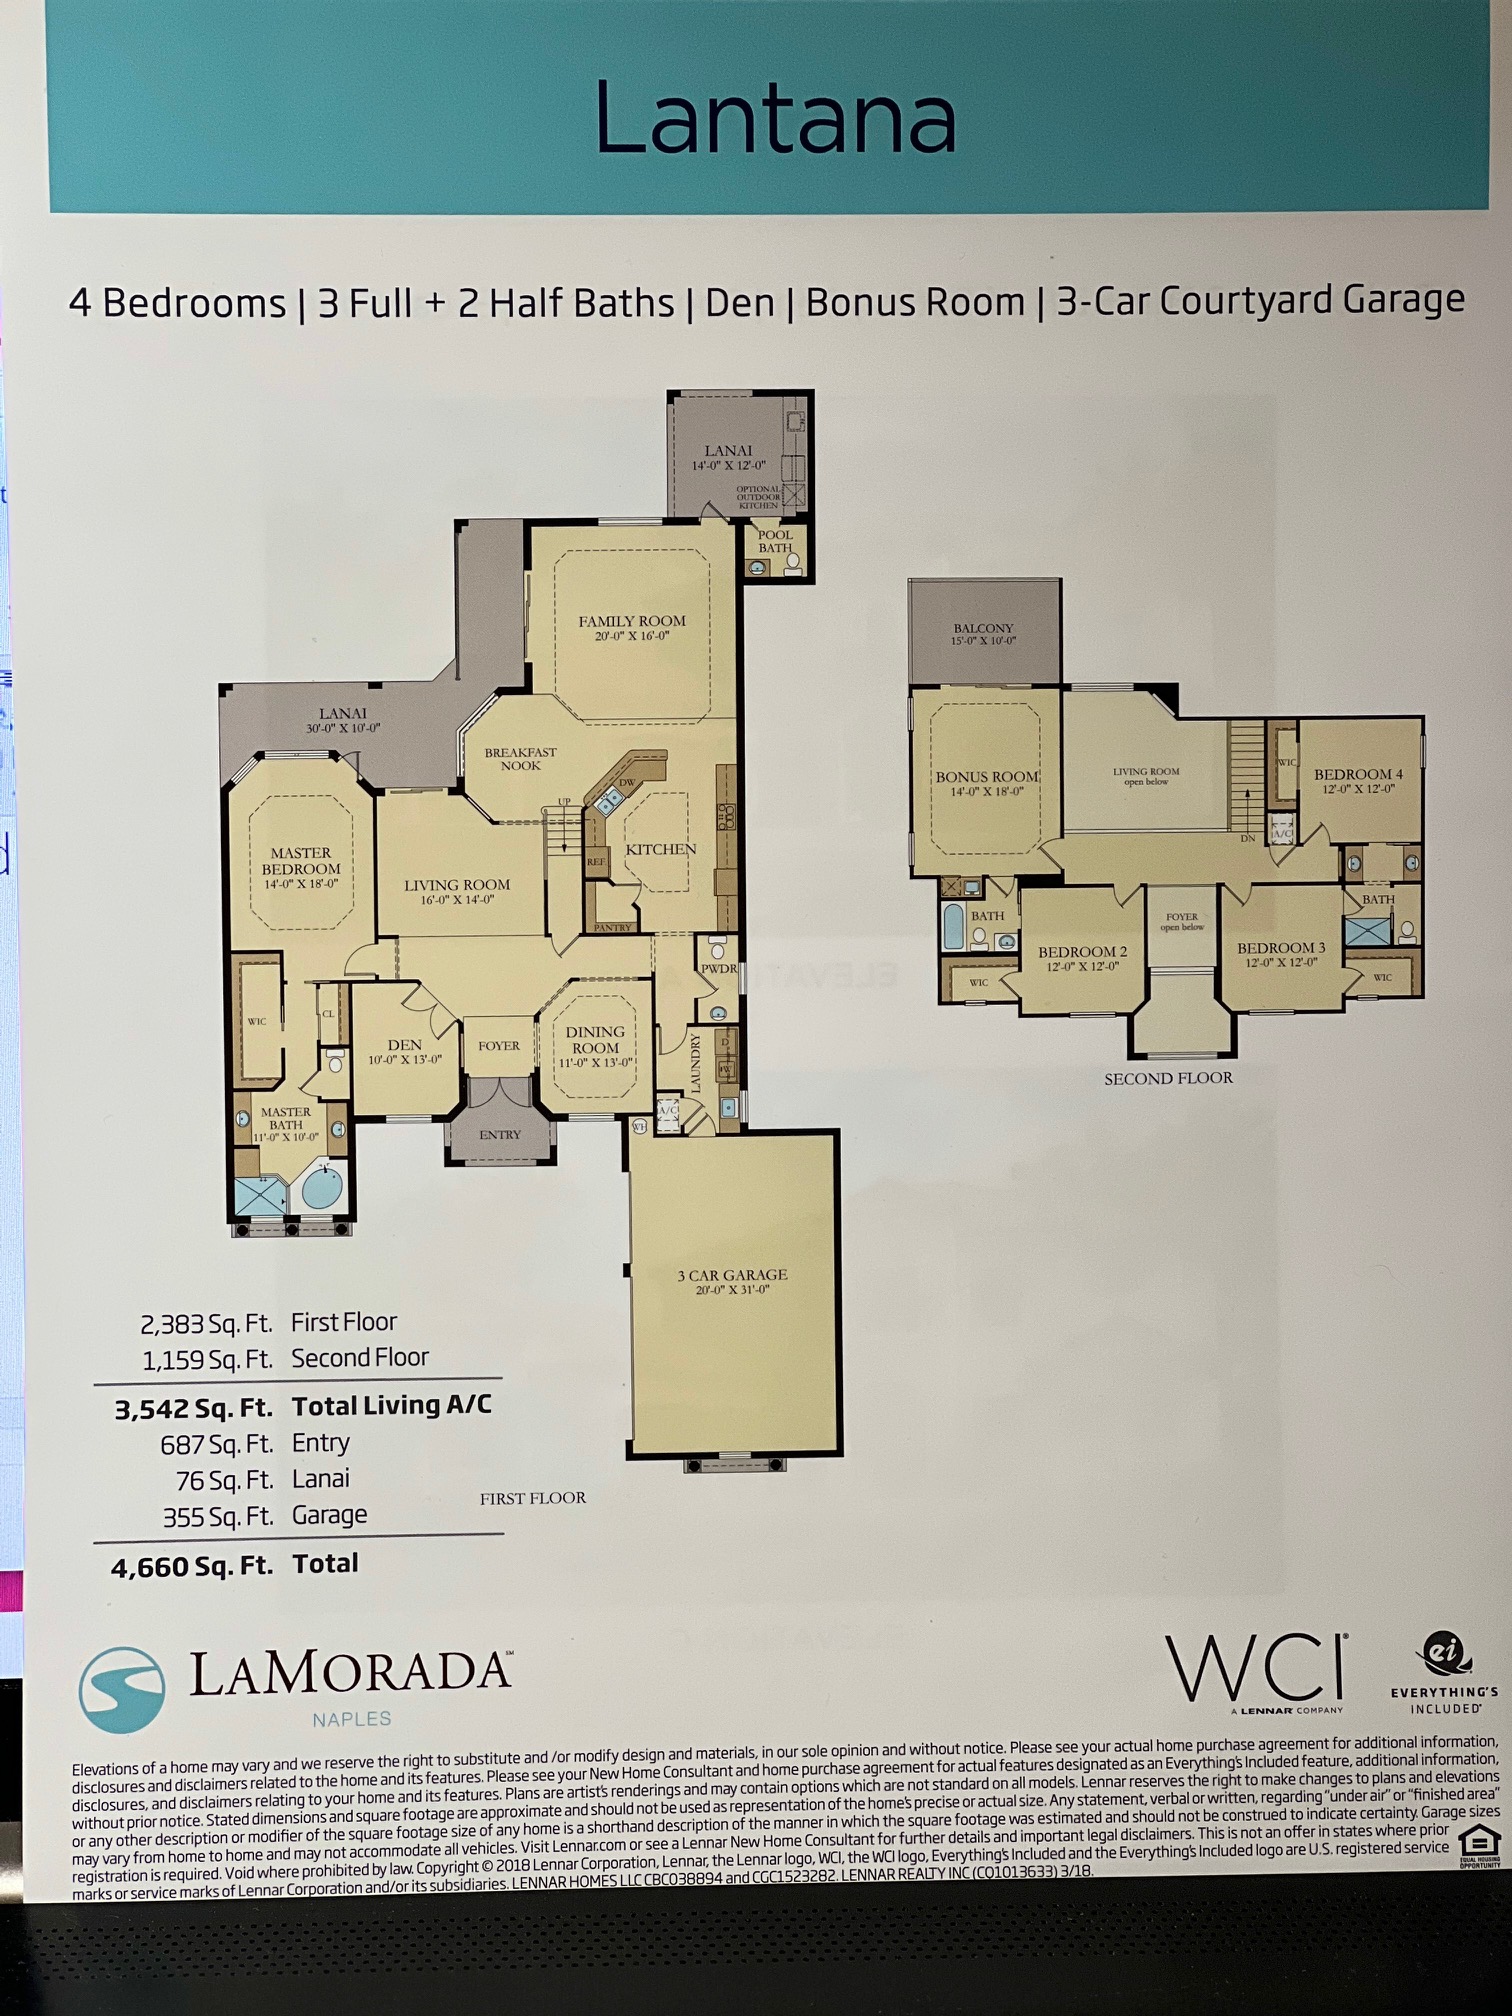 Lamorada Lantana Floor Plan